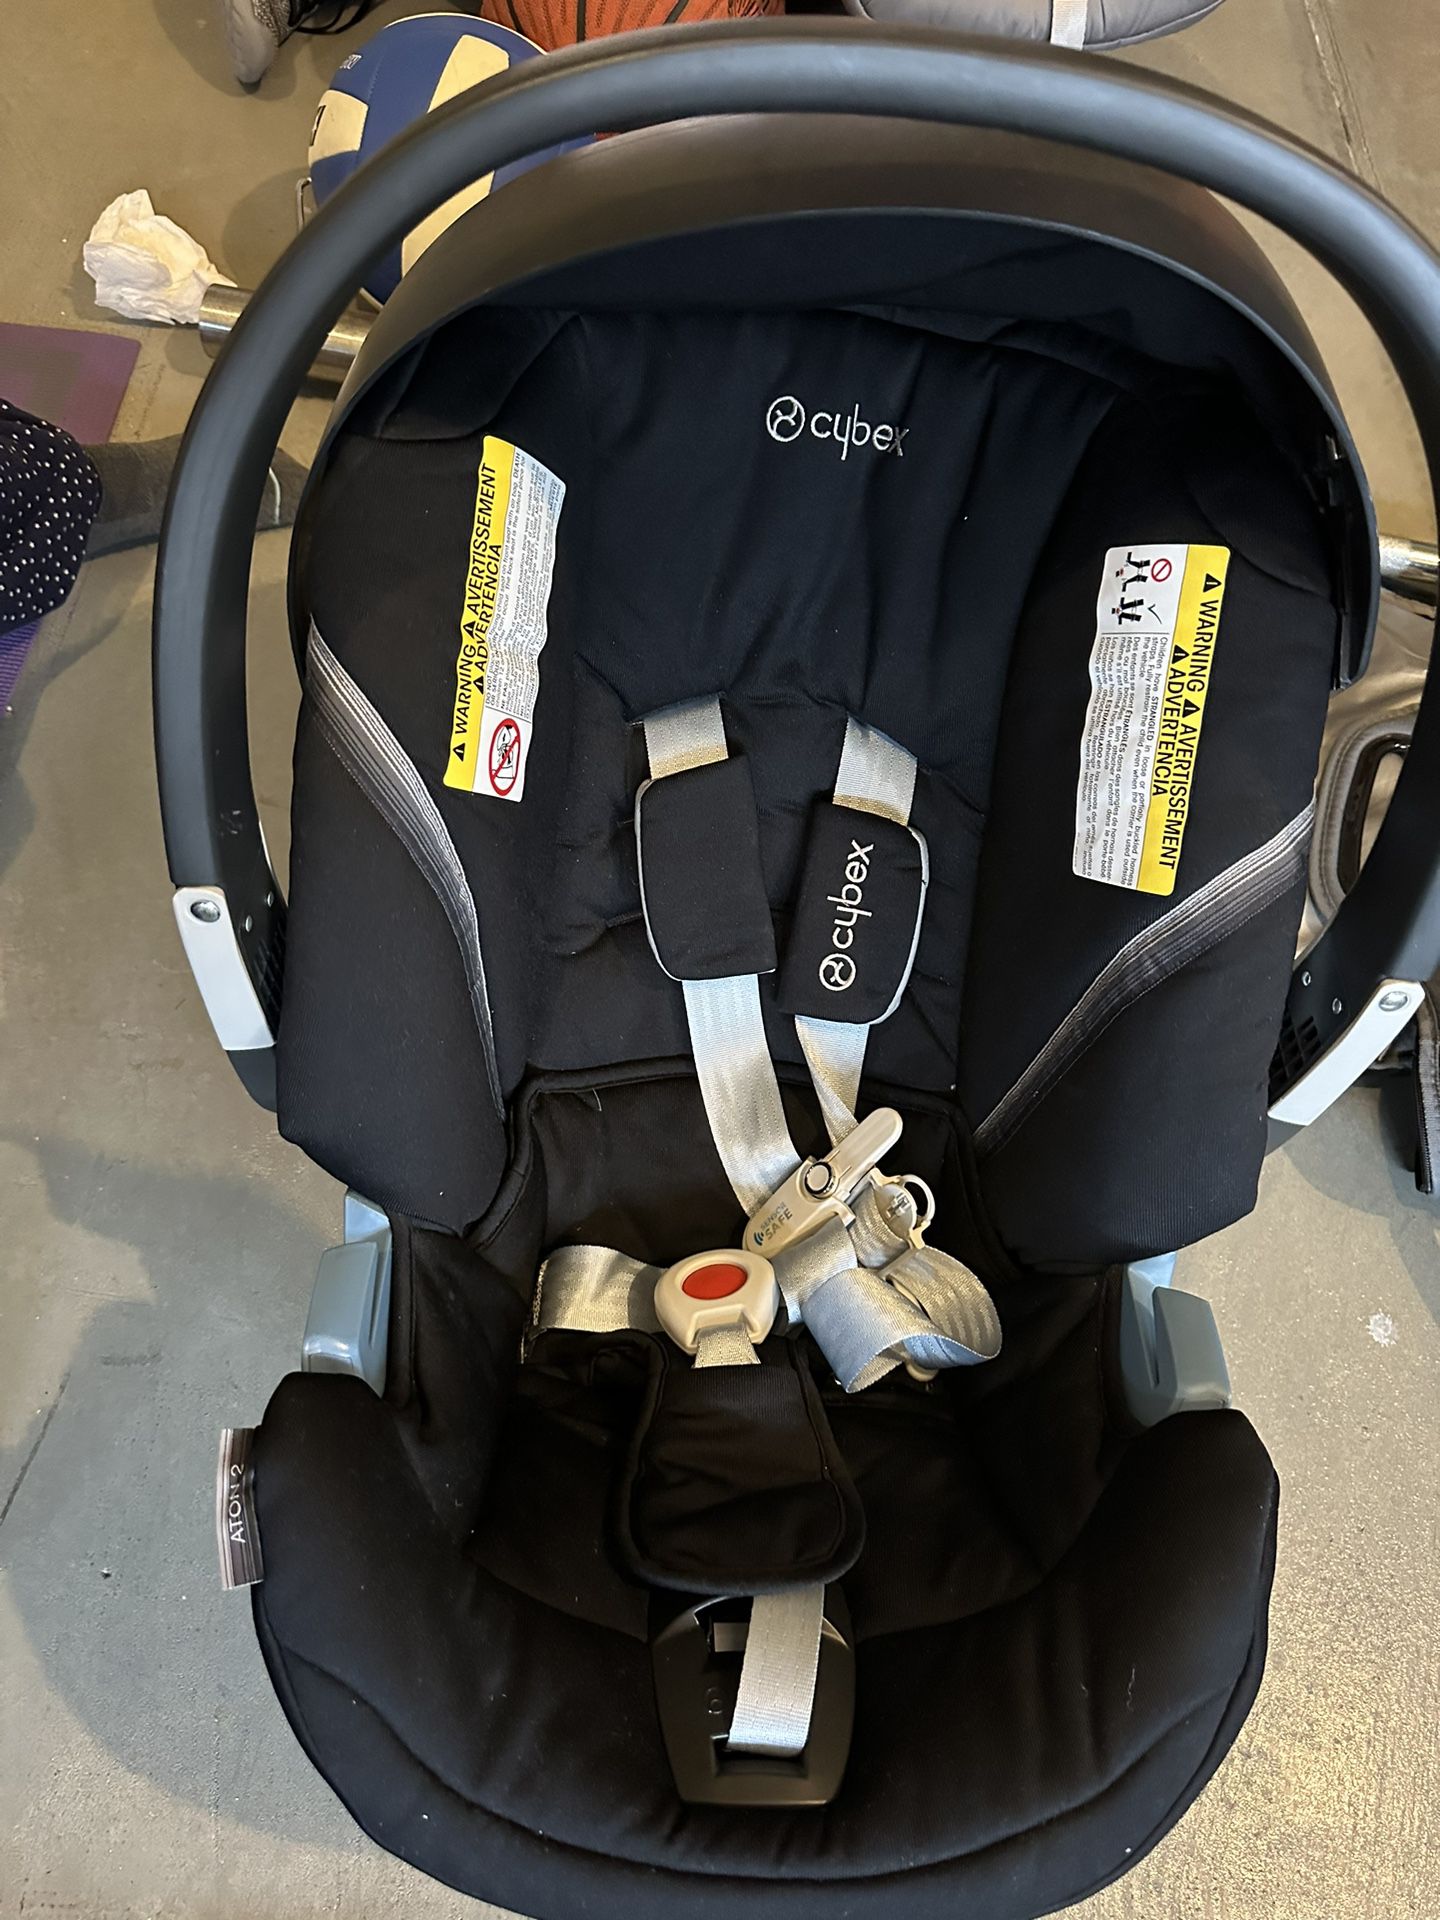 Aton 2 Cybex Infant Car seat 